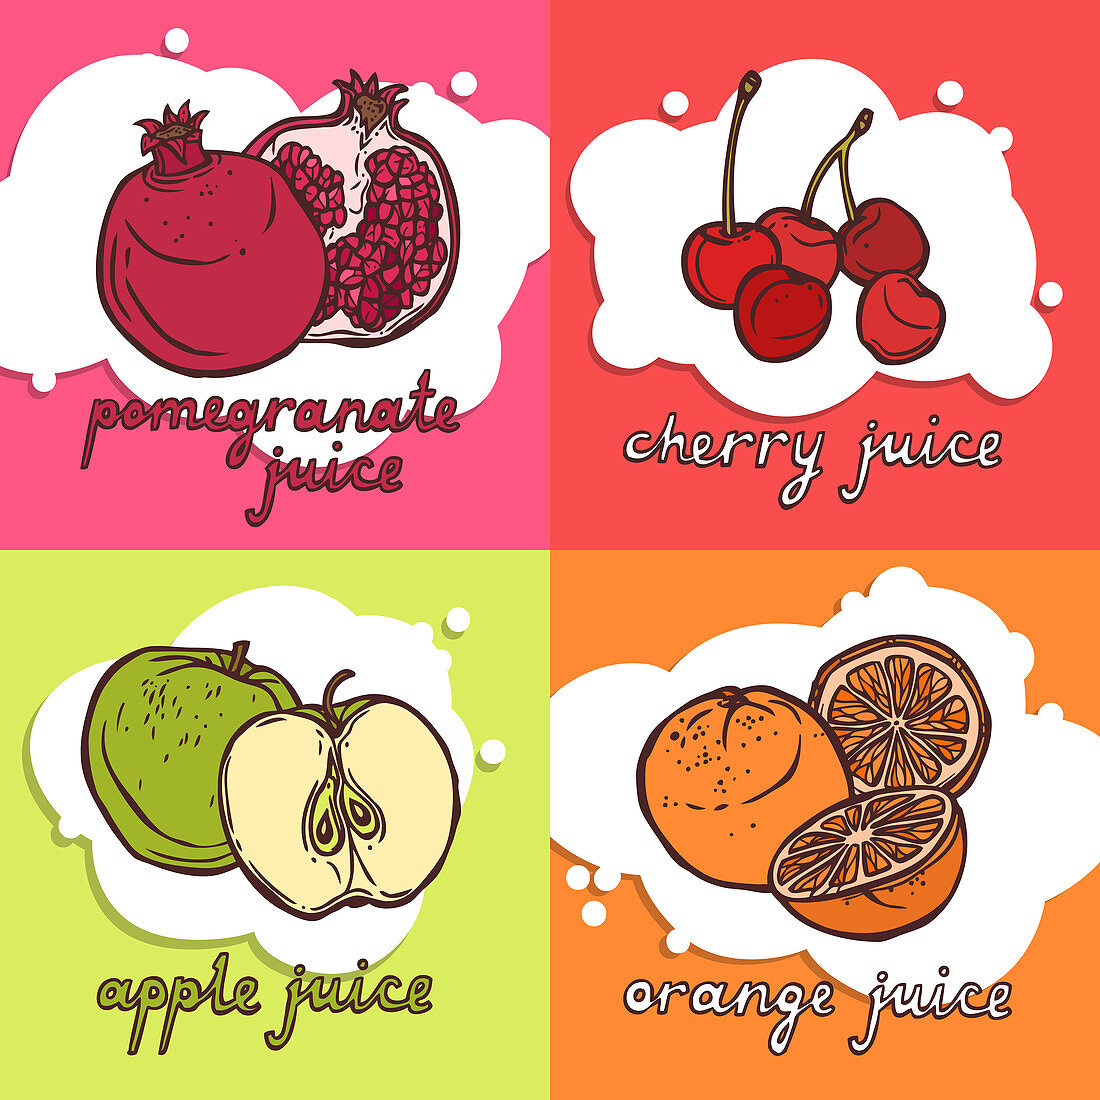 Fruit juices, illustration